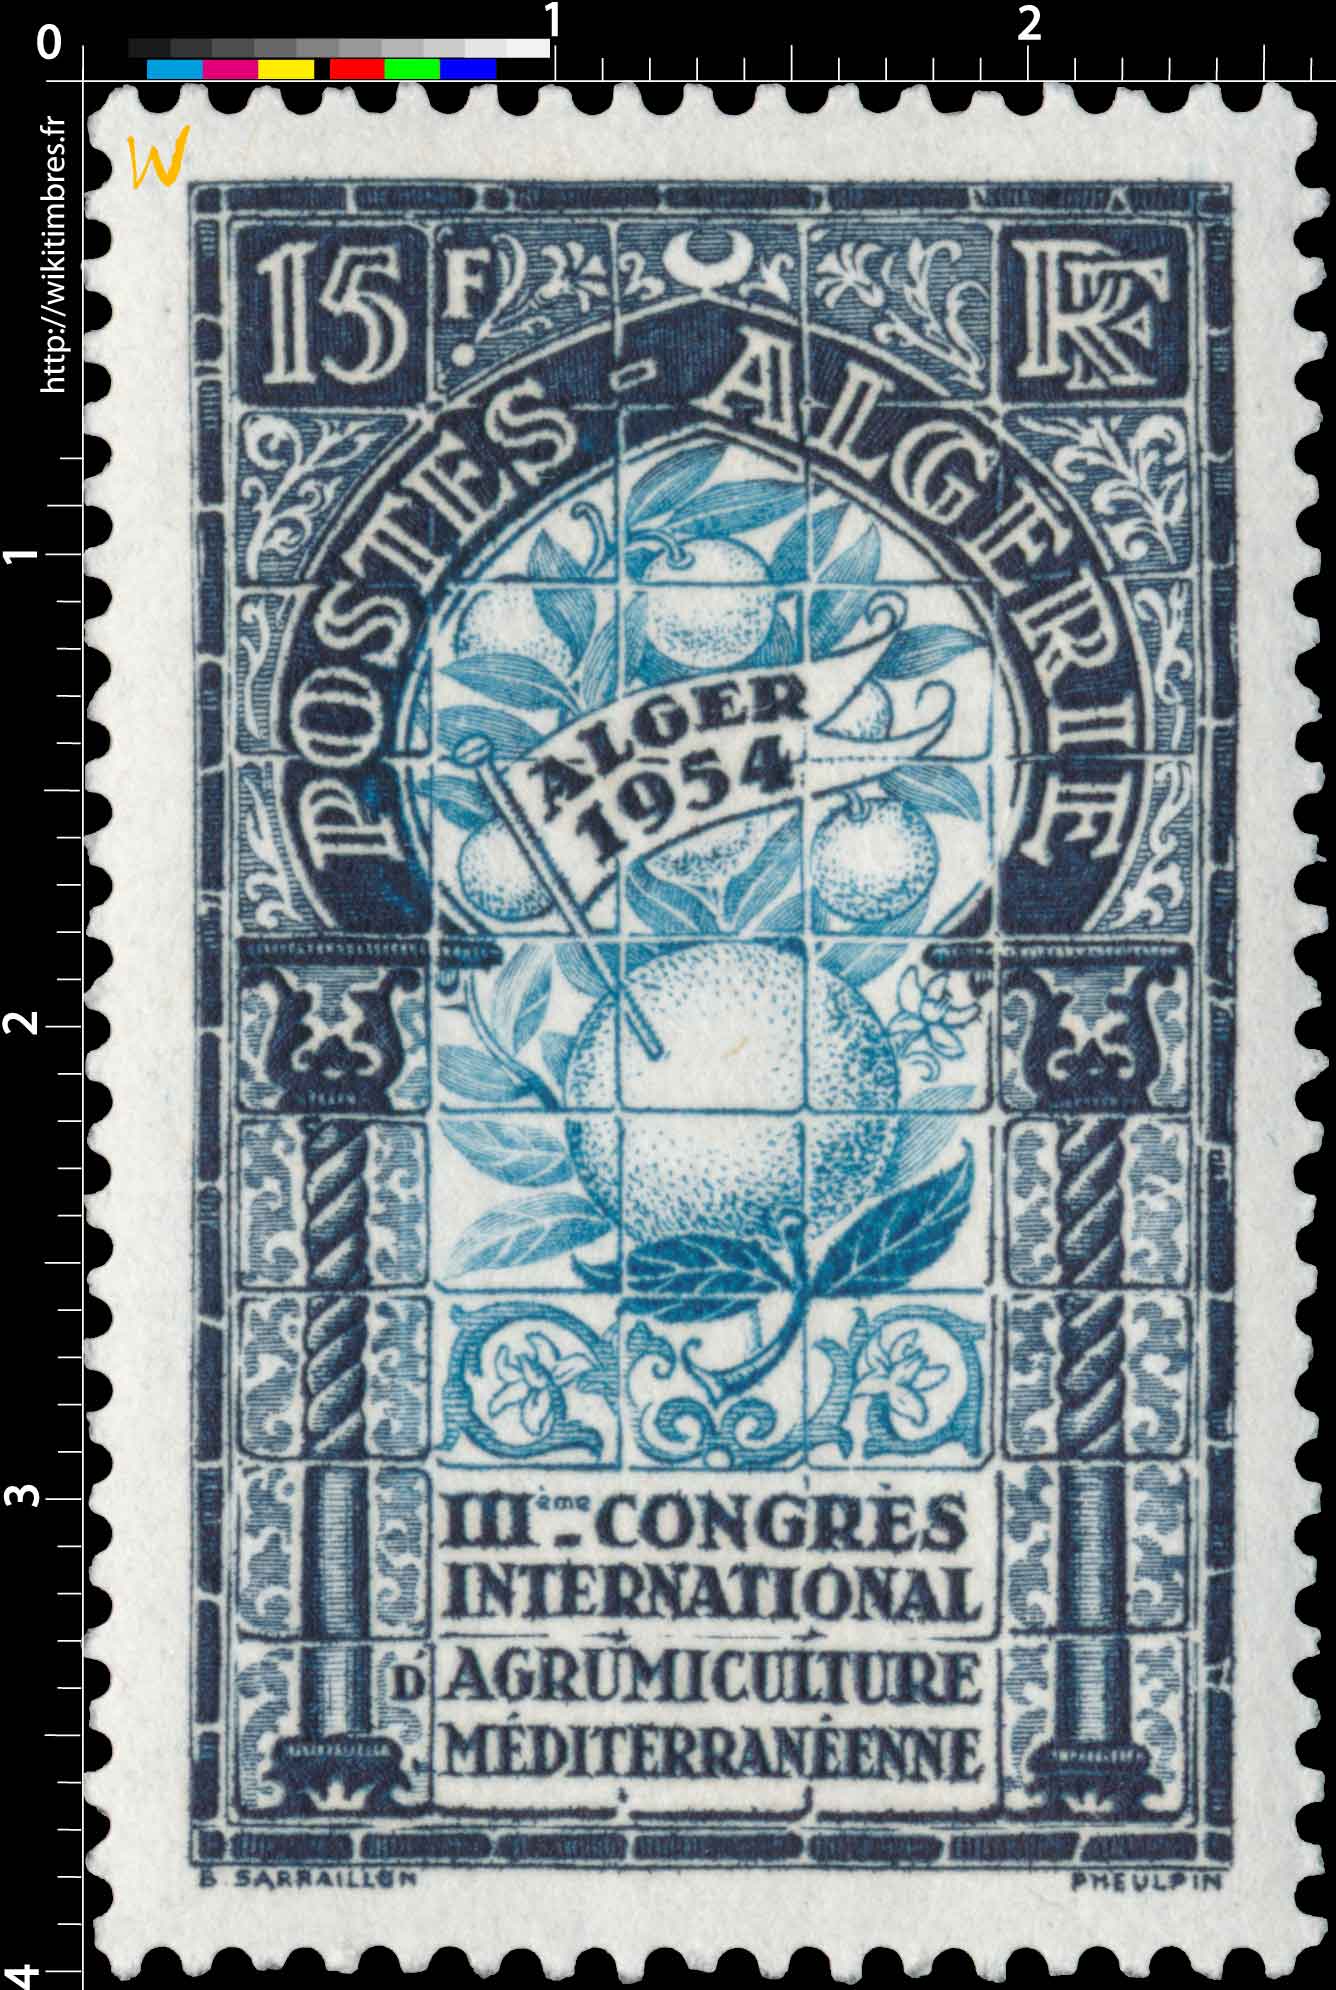 Algérie - IIIe congrès international agrumiculture méditerranéenne Alger 1954